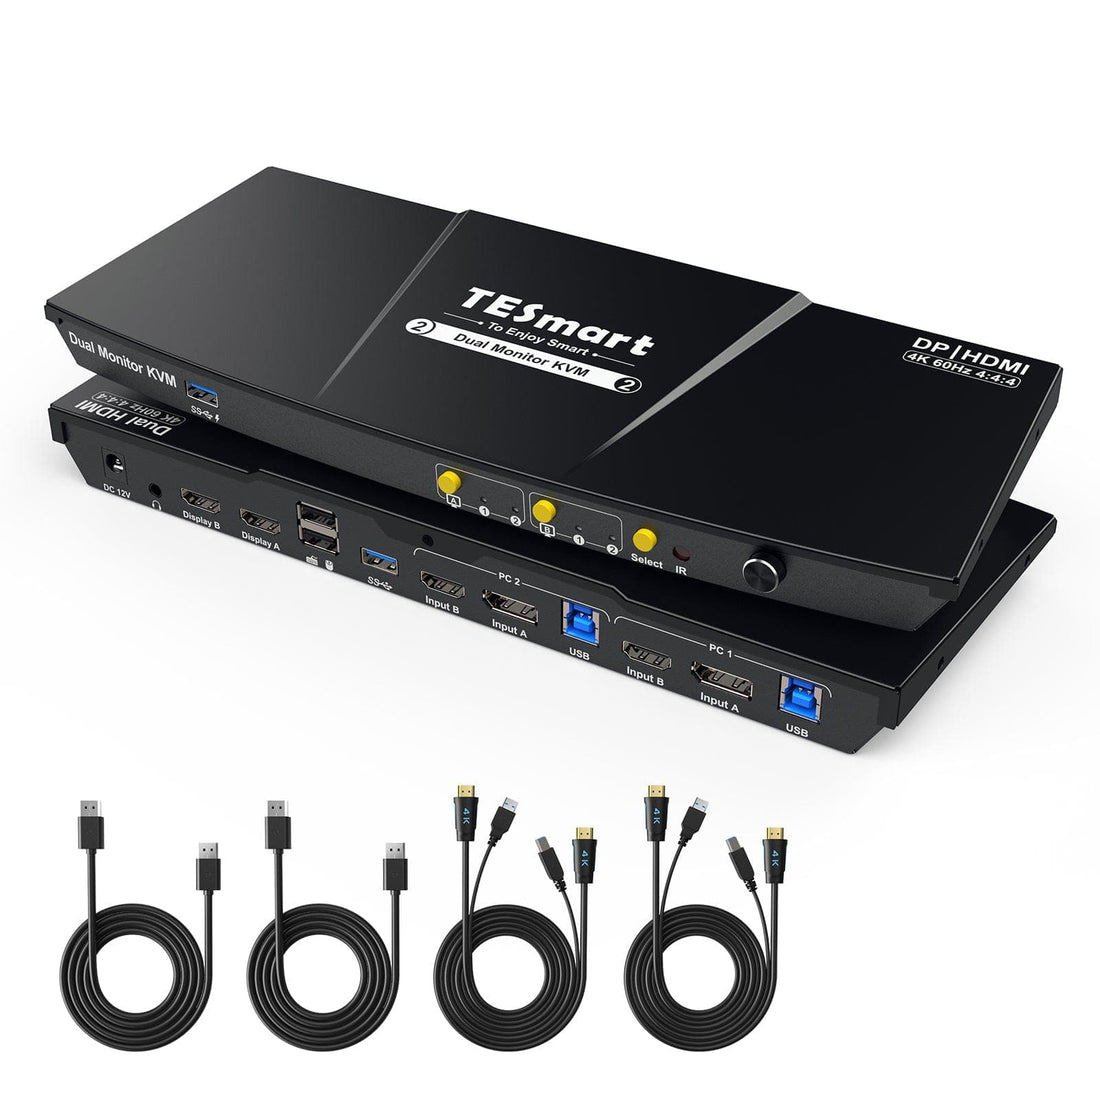 TESmart Dual Monitor KVM Switch 2-Port Dual-Monitor KVM-Switch-Kit HDMI+DP 4K60Hz mit USB 3.0 Dockingstation, EDID